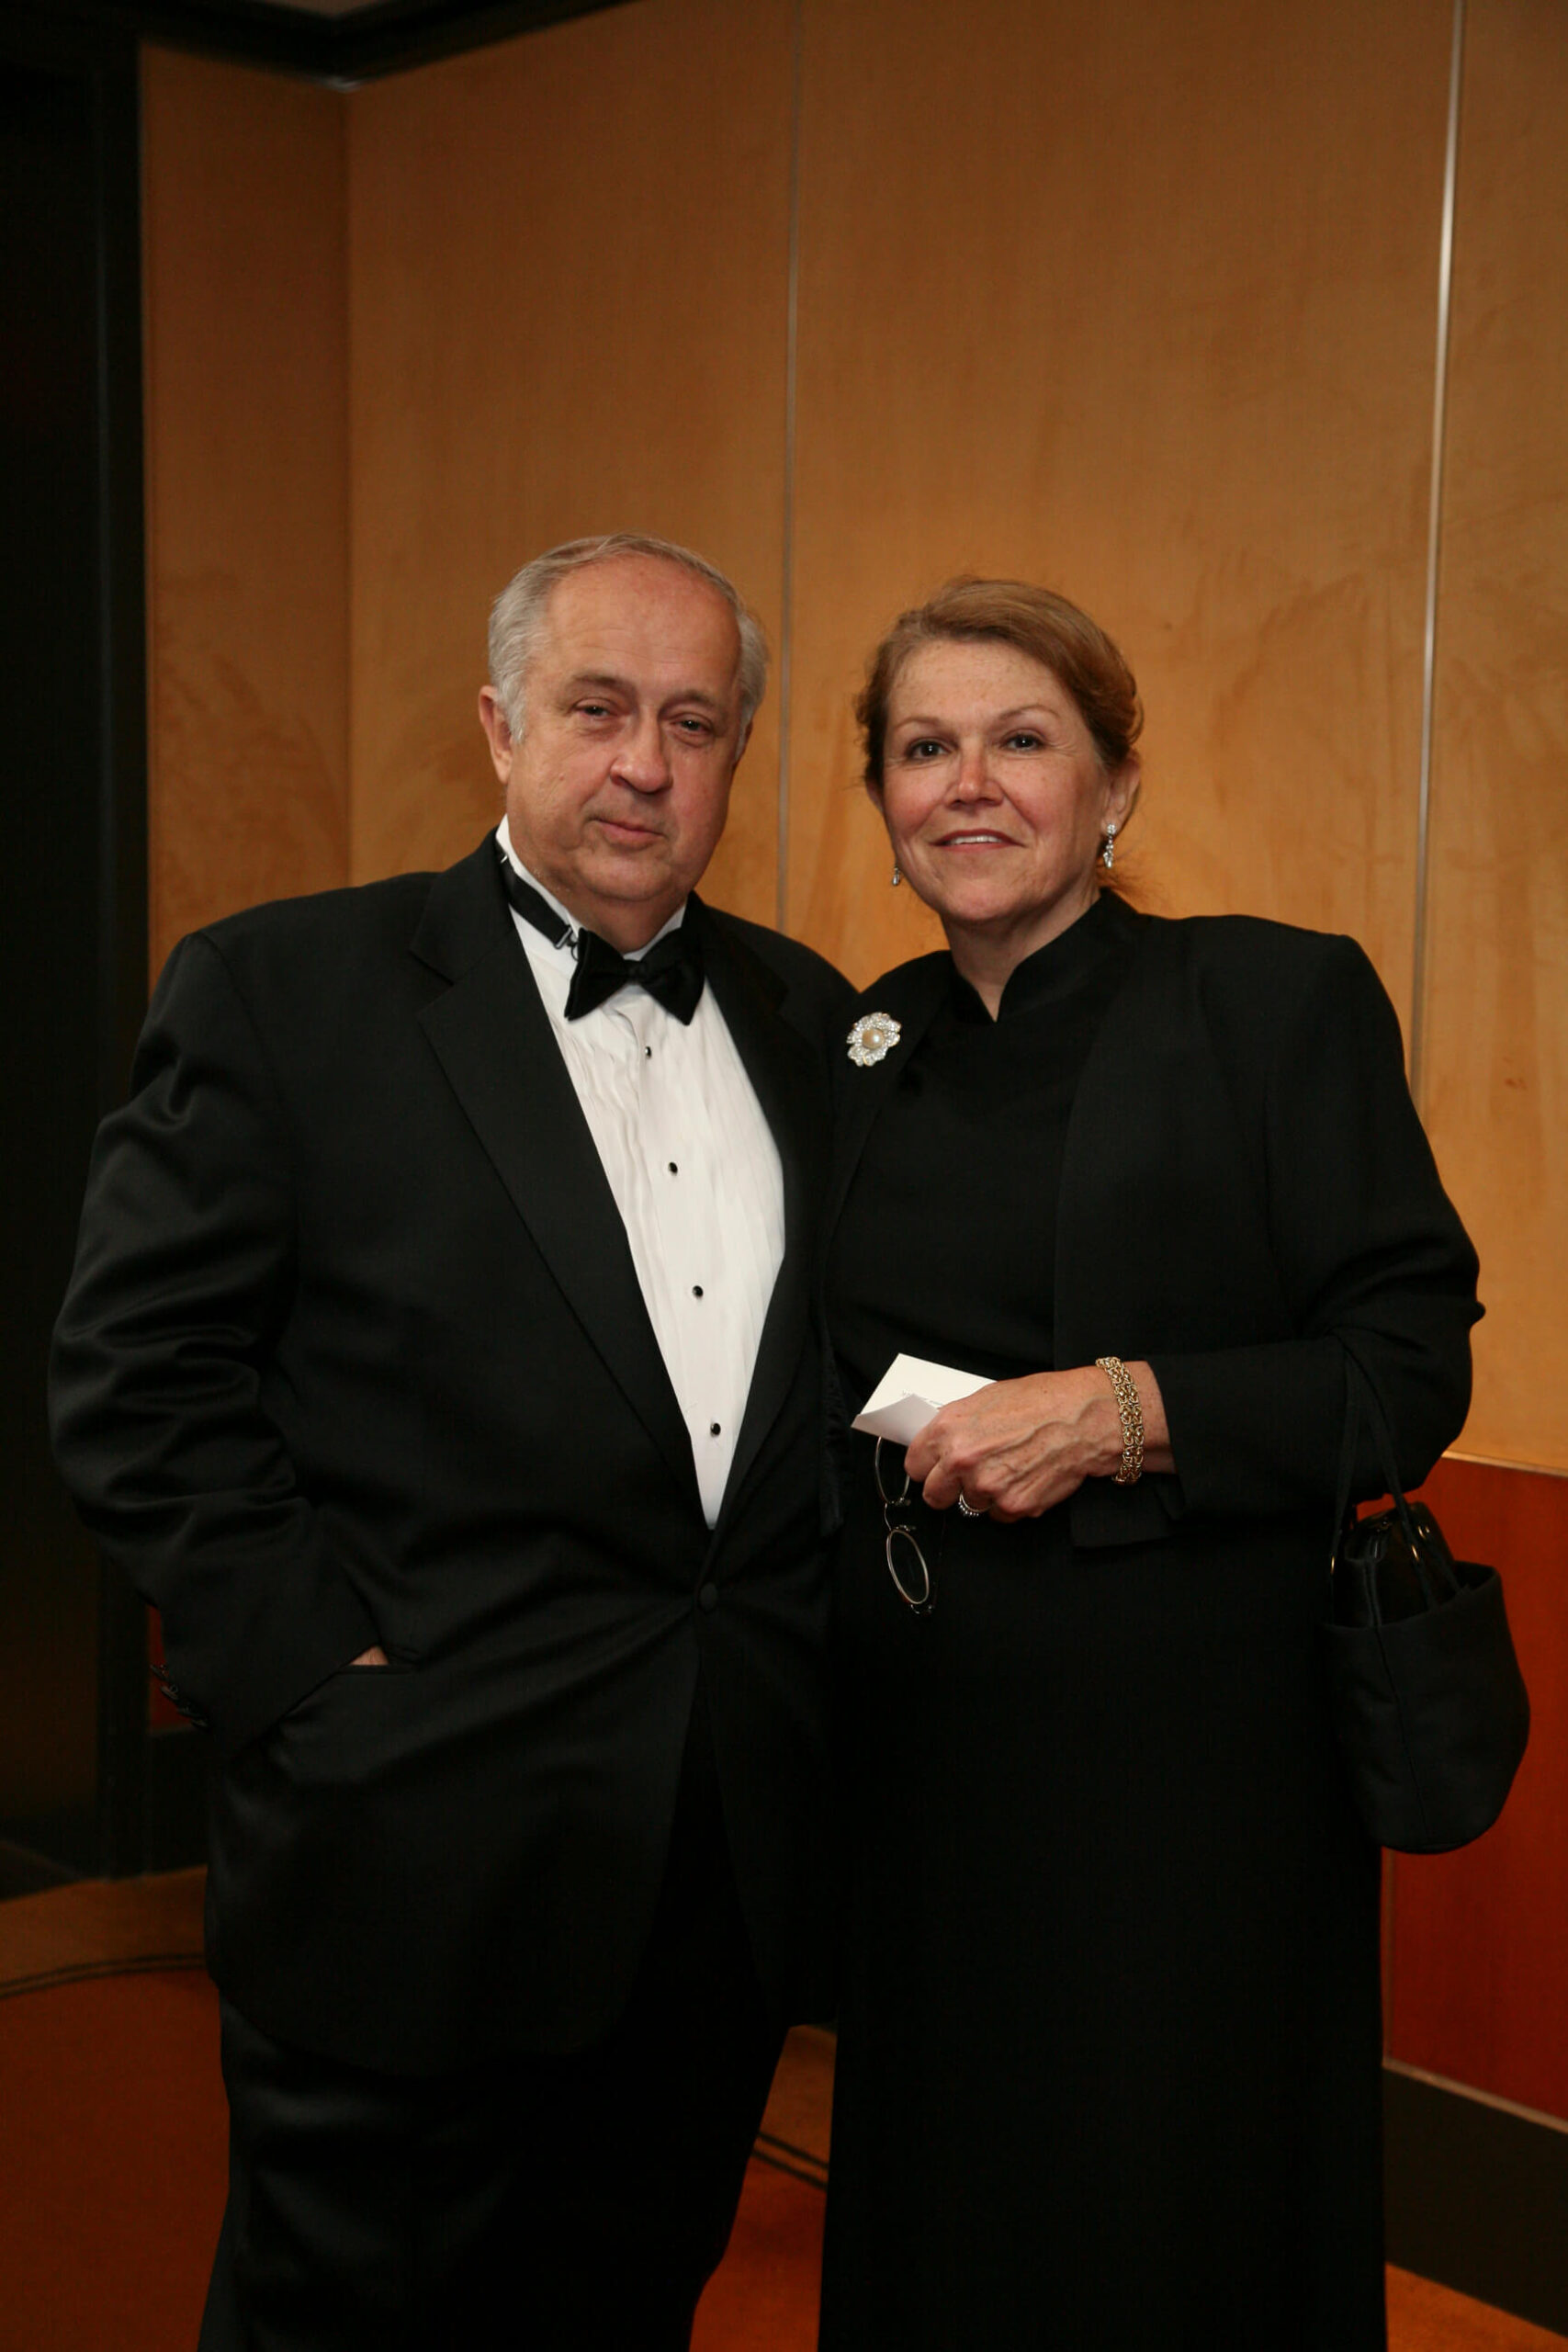 Mr. Charles Vamossy and Ms. Barbara Vamossy